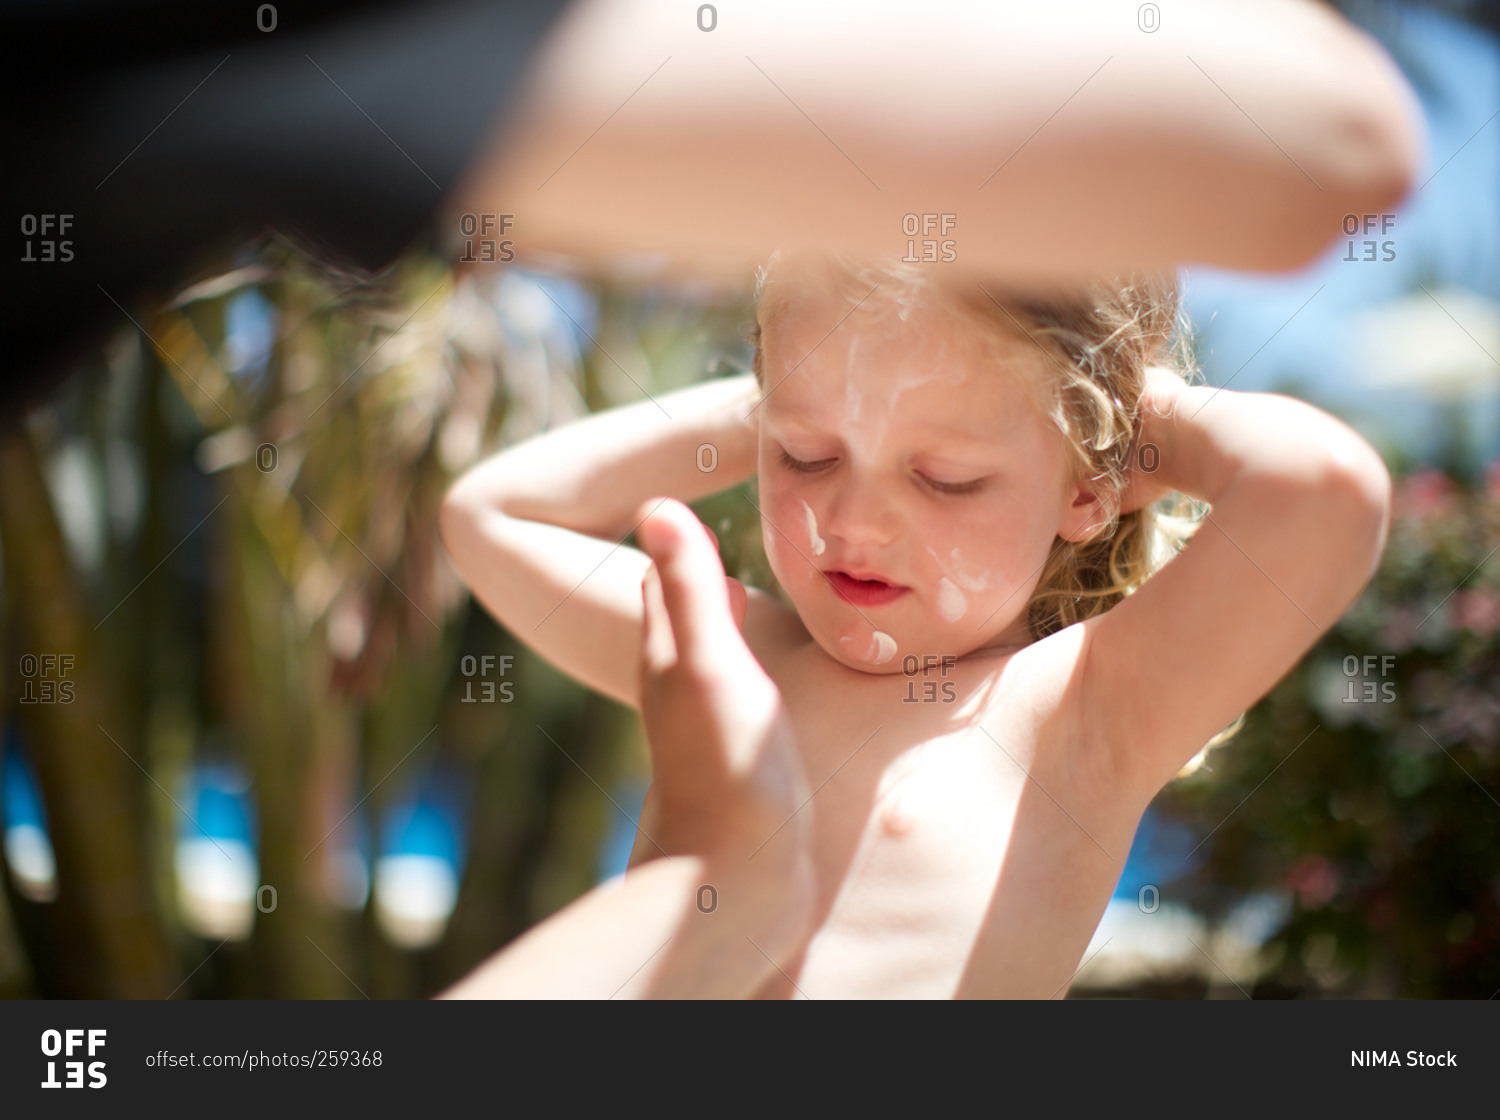 Parent applying sun lotion on girl's face